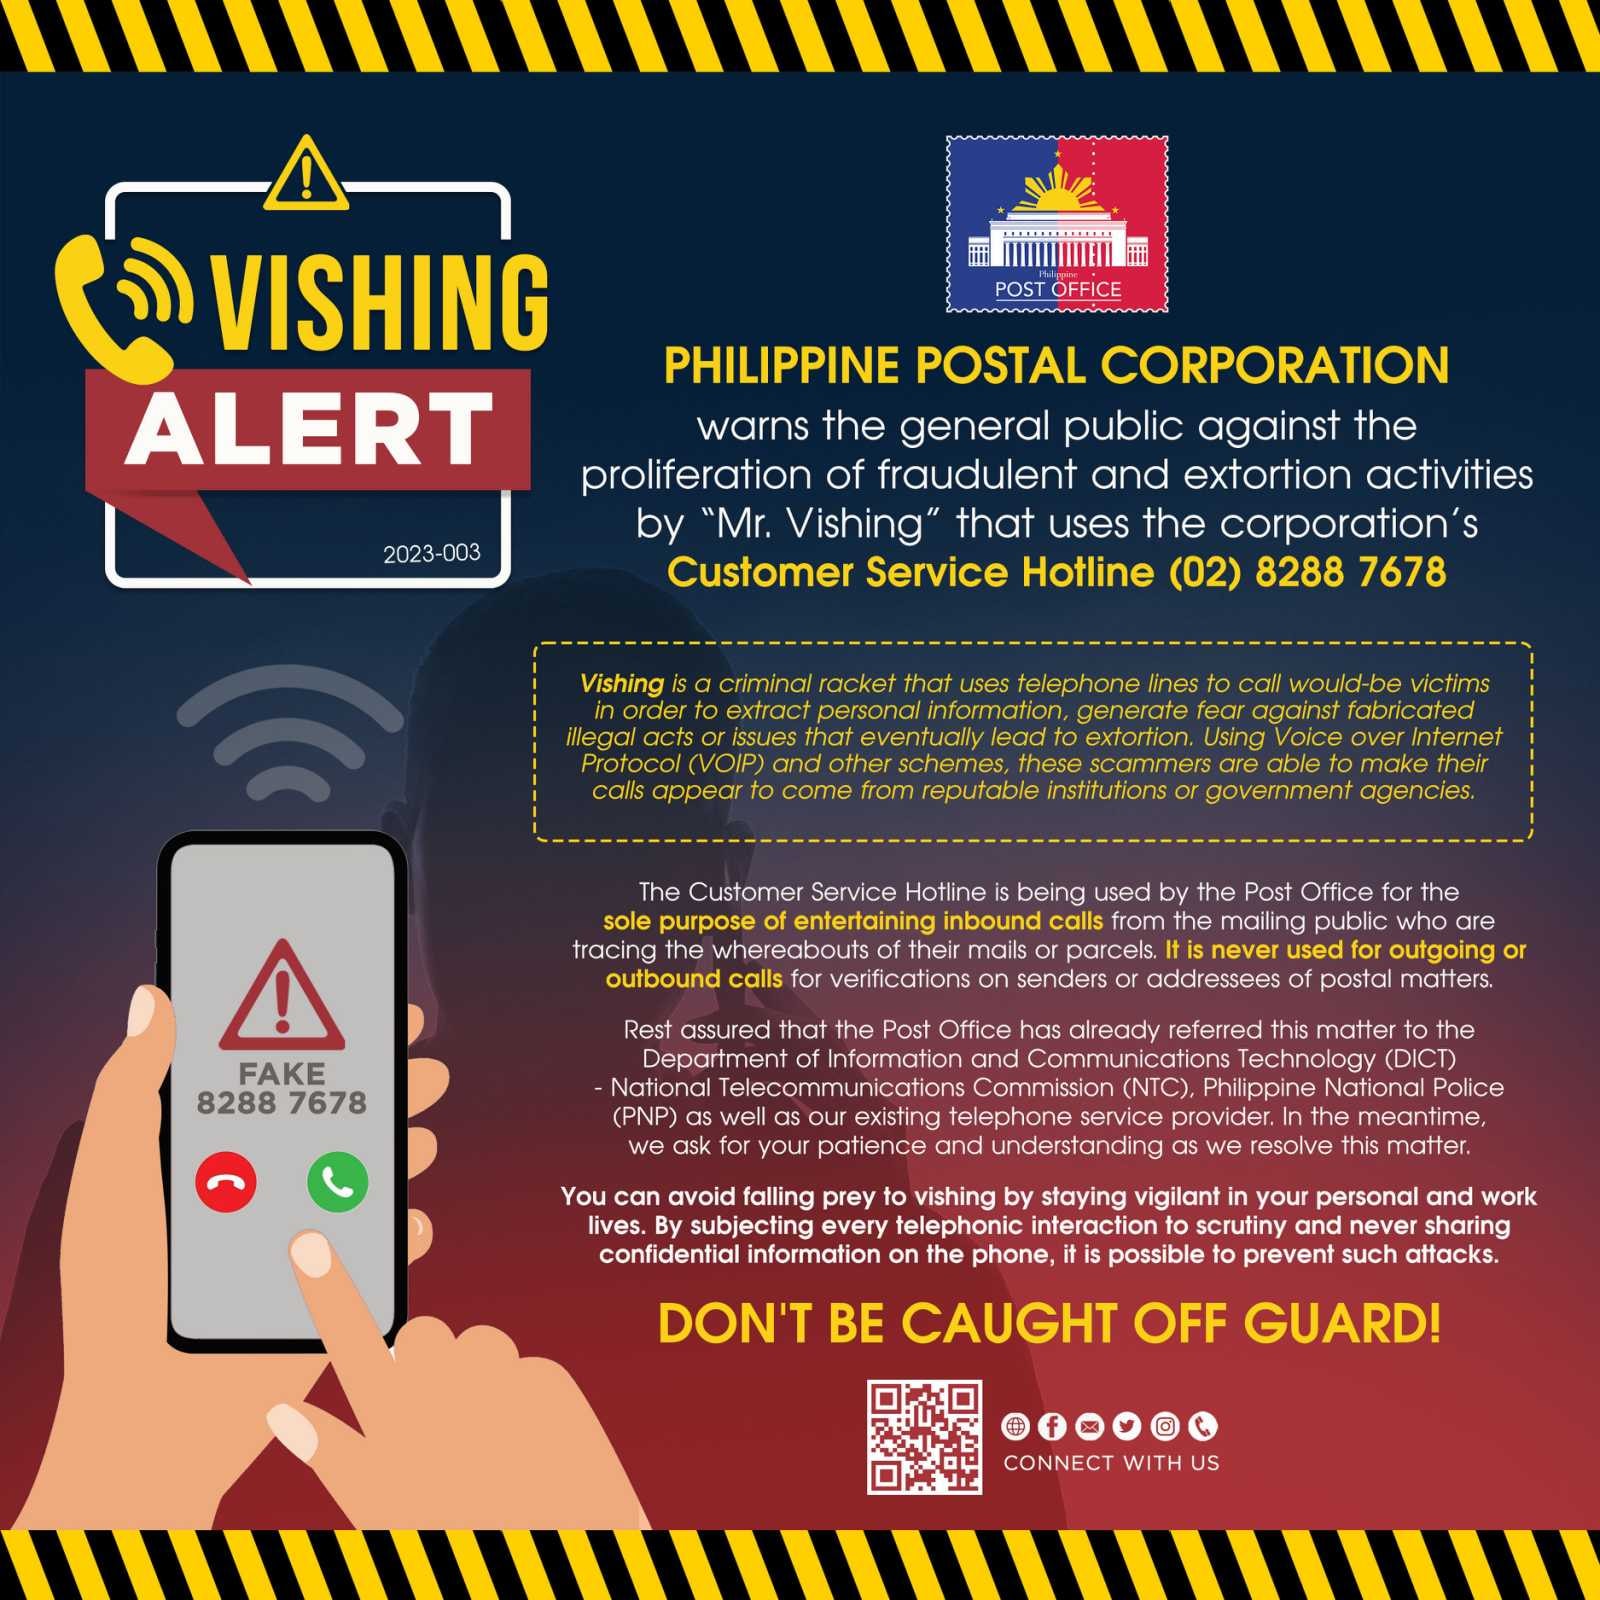 Philippine Post Office warns against “Mr. Vishing”